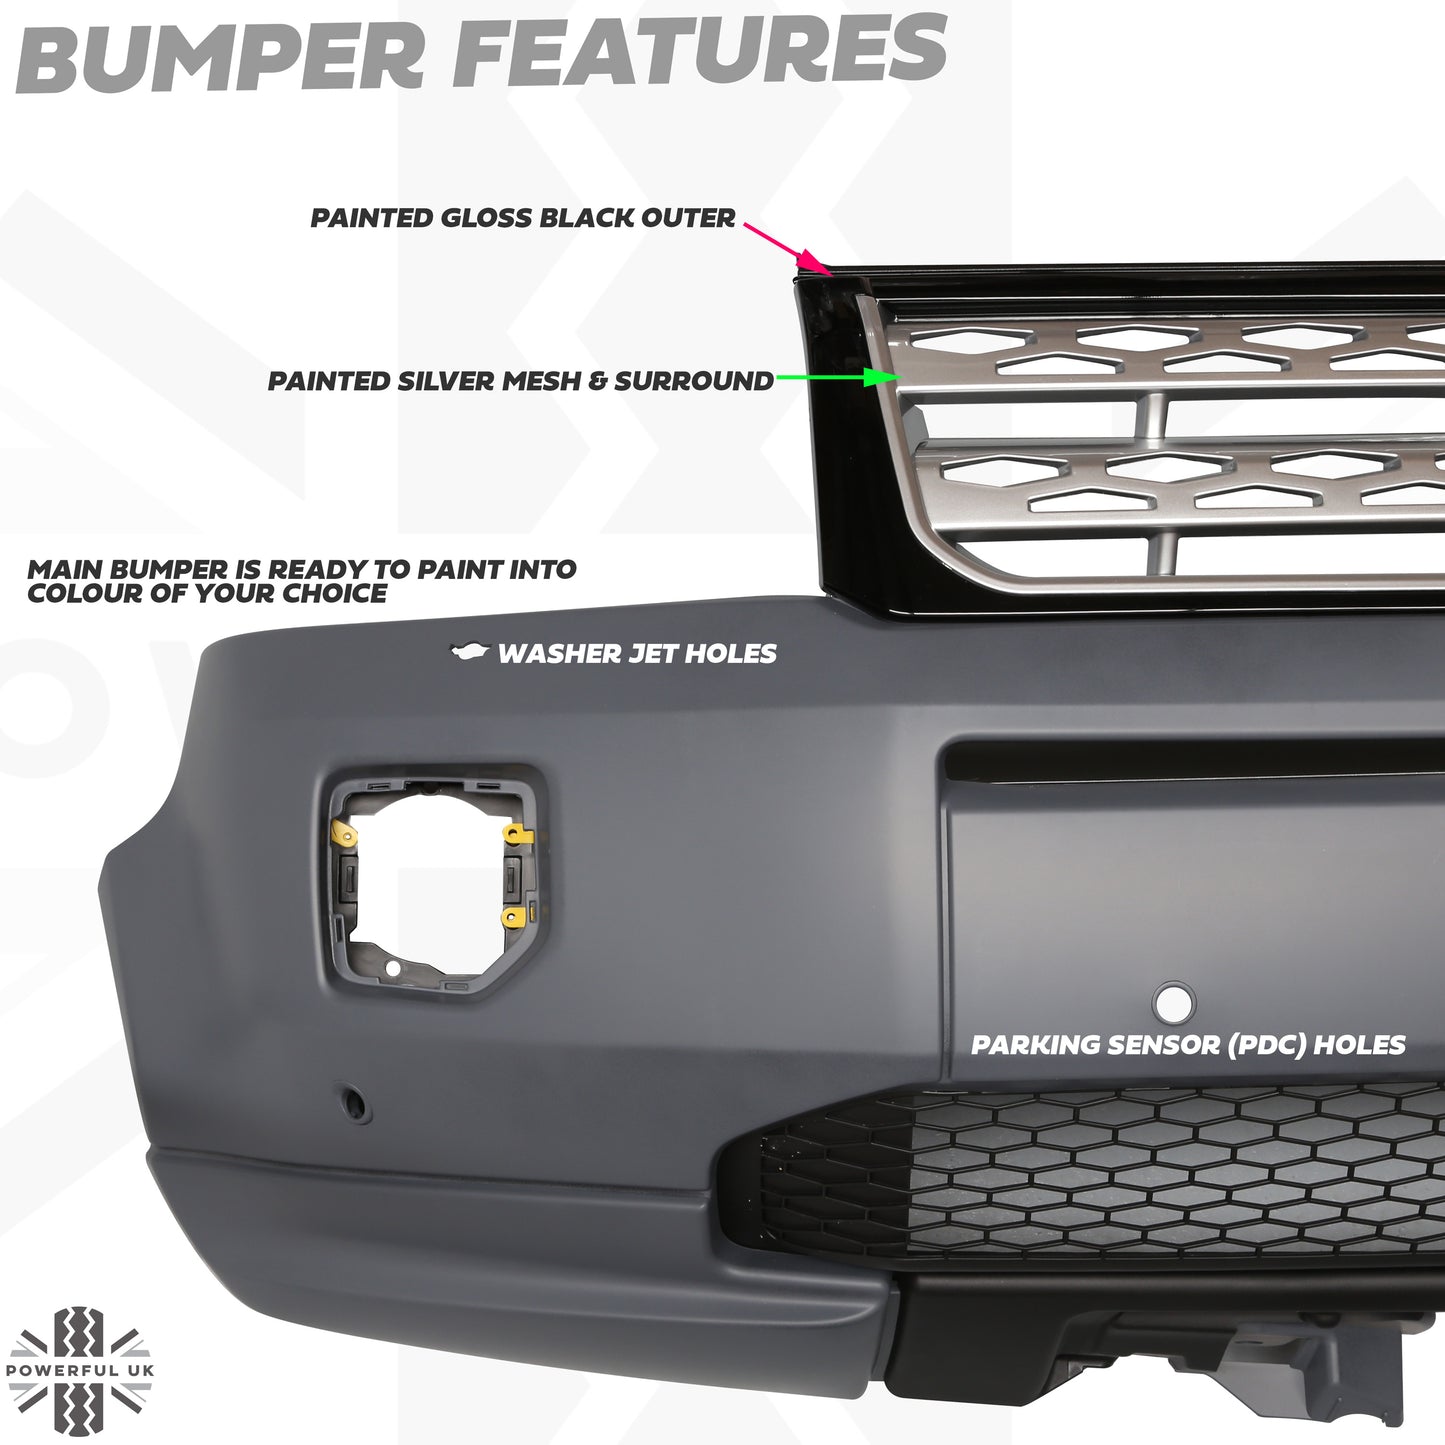 Front Bumper & Grille 2012 Facelift Style - Silver grille - for Land Rover Freelander 2